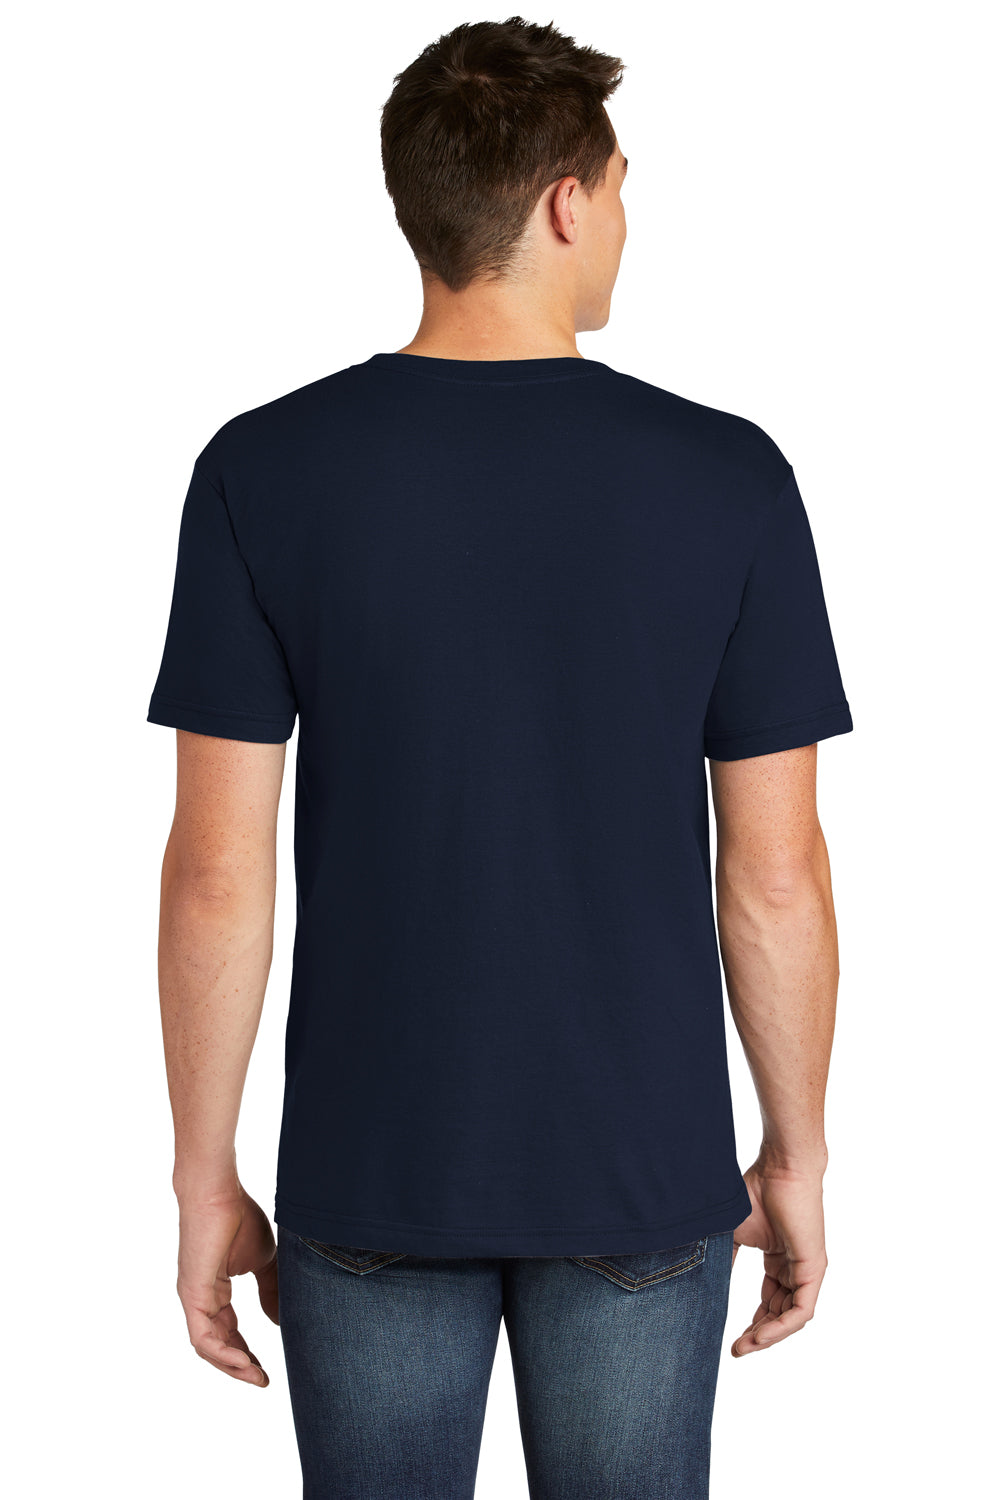 American Apparel Mens Fine Jersey Short Sleeve V-Neck T-Shirt Navy Blue Side